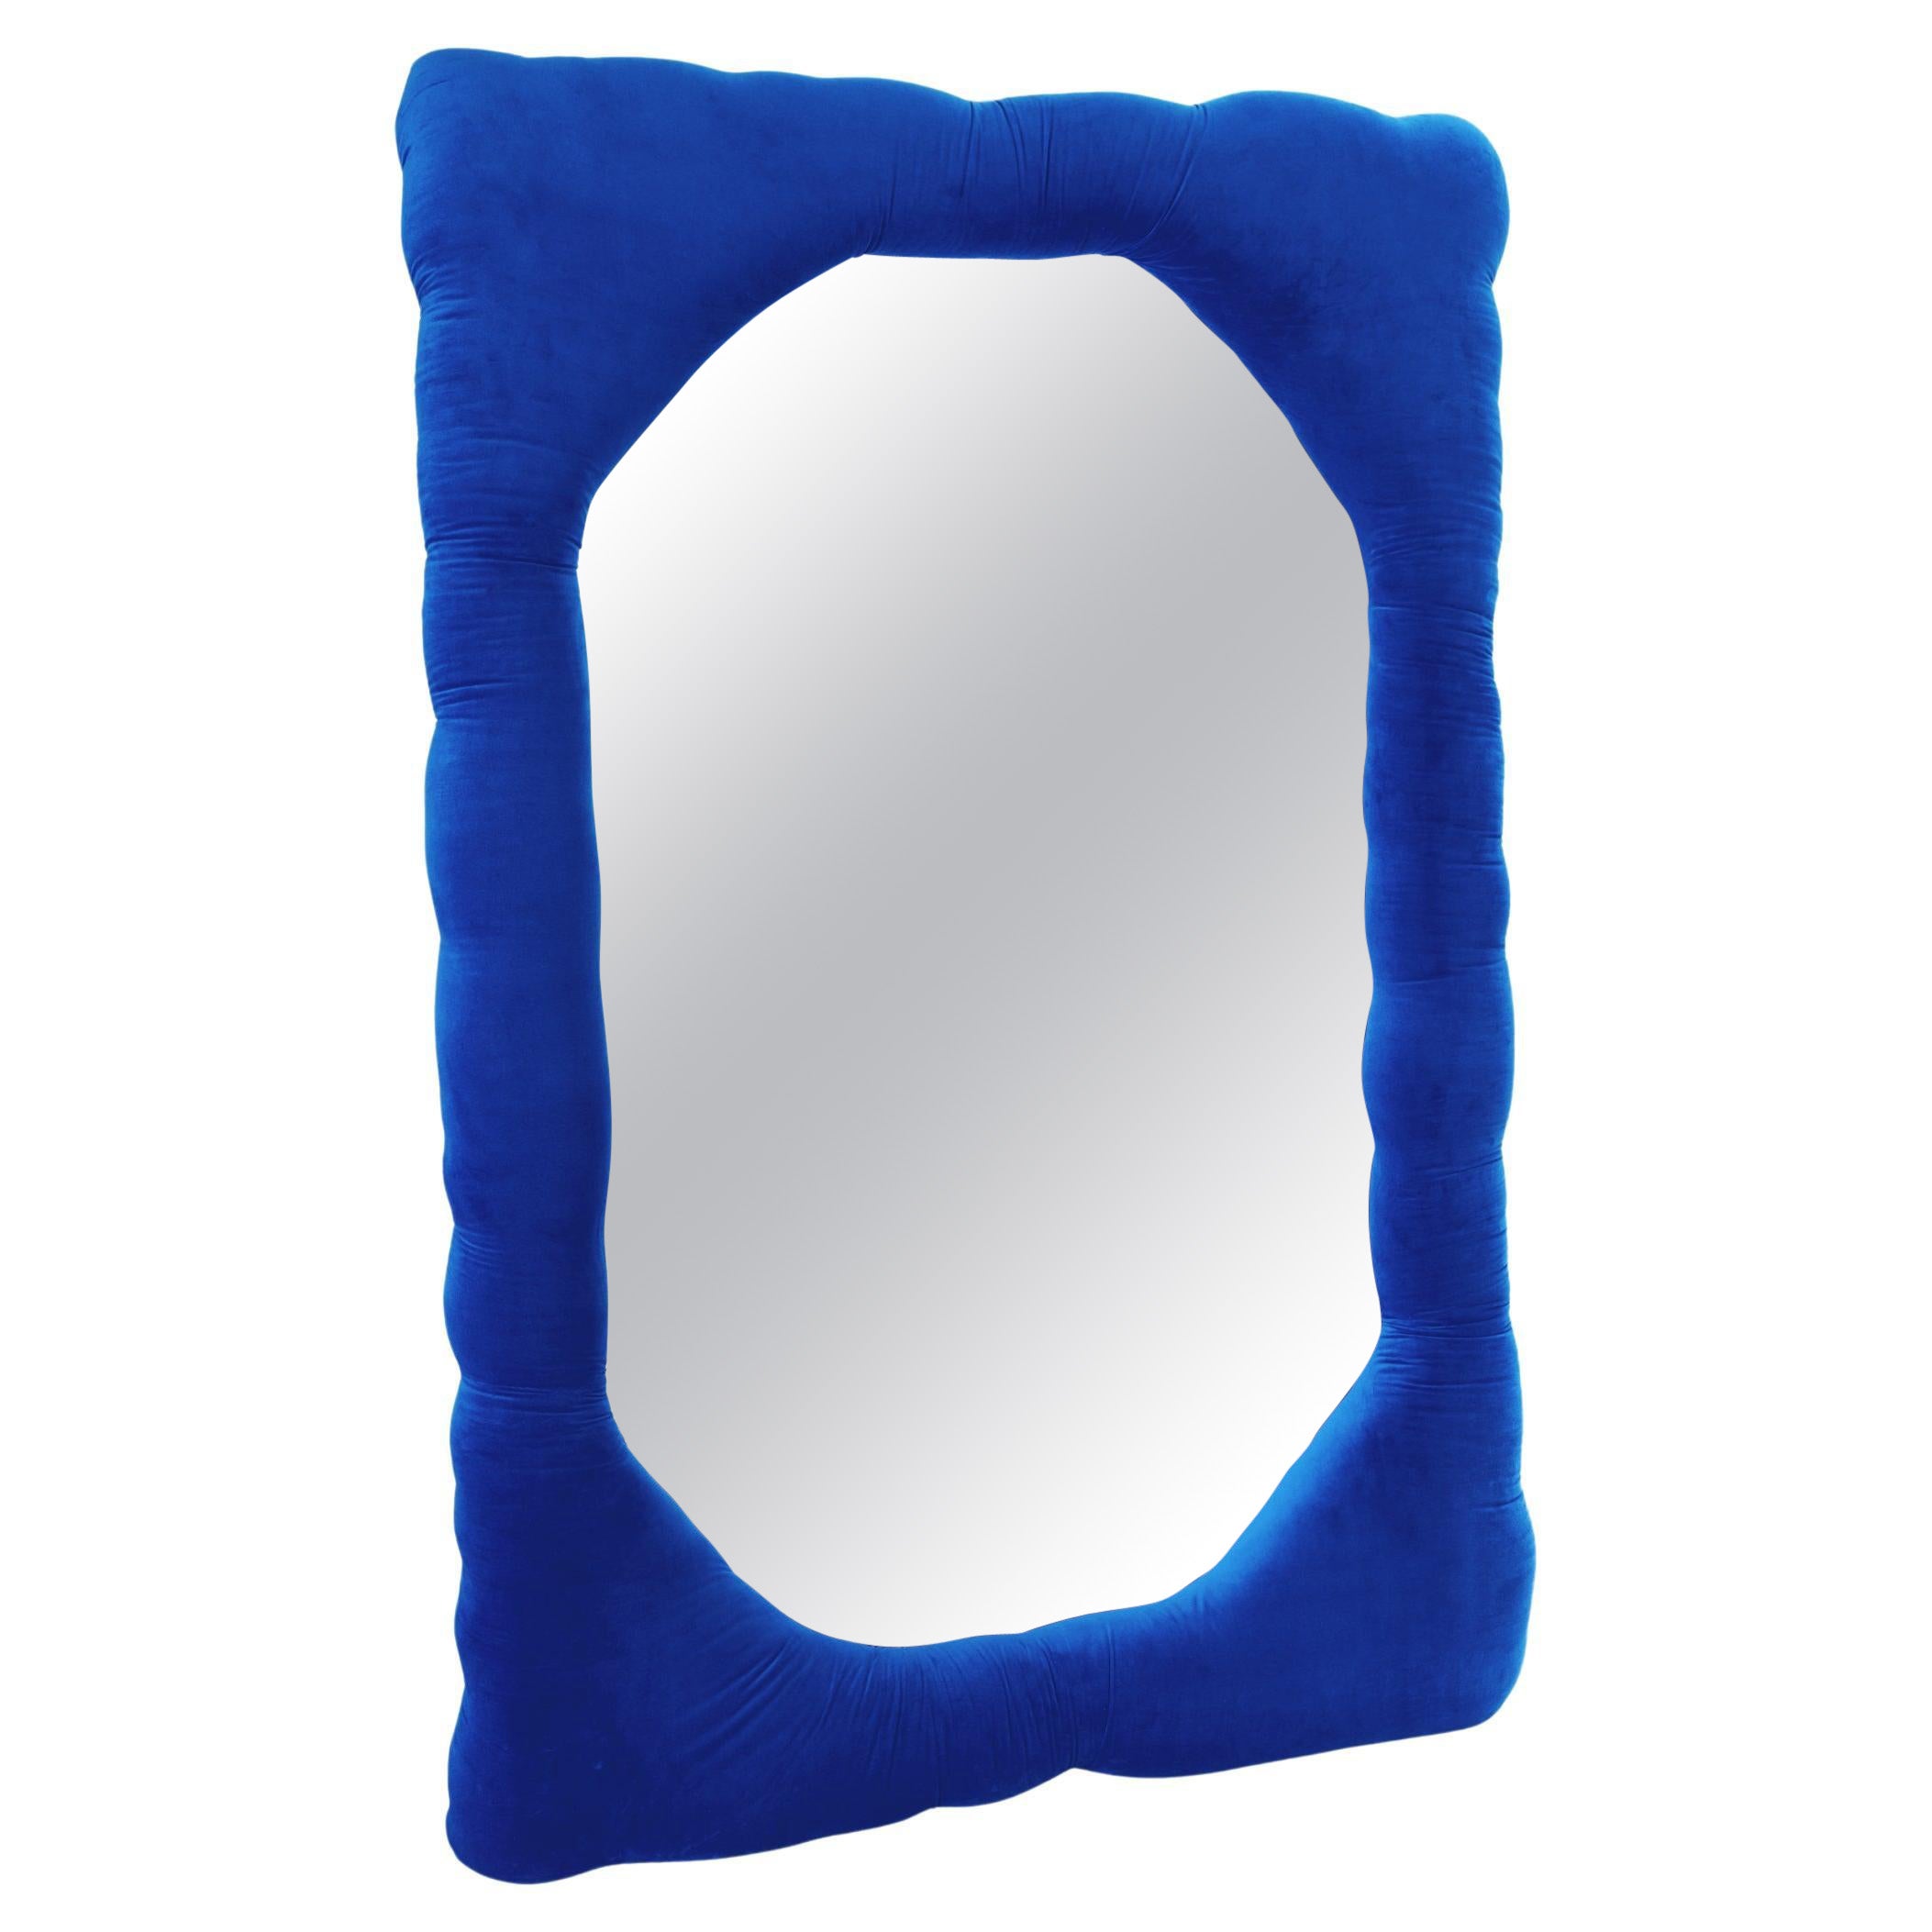 Velvet Biomorphic Mirror in Cobalt Blue by Brandi Howe, REP by Tuleste Factory For Sale